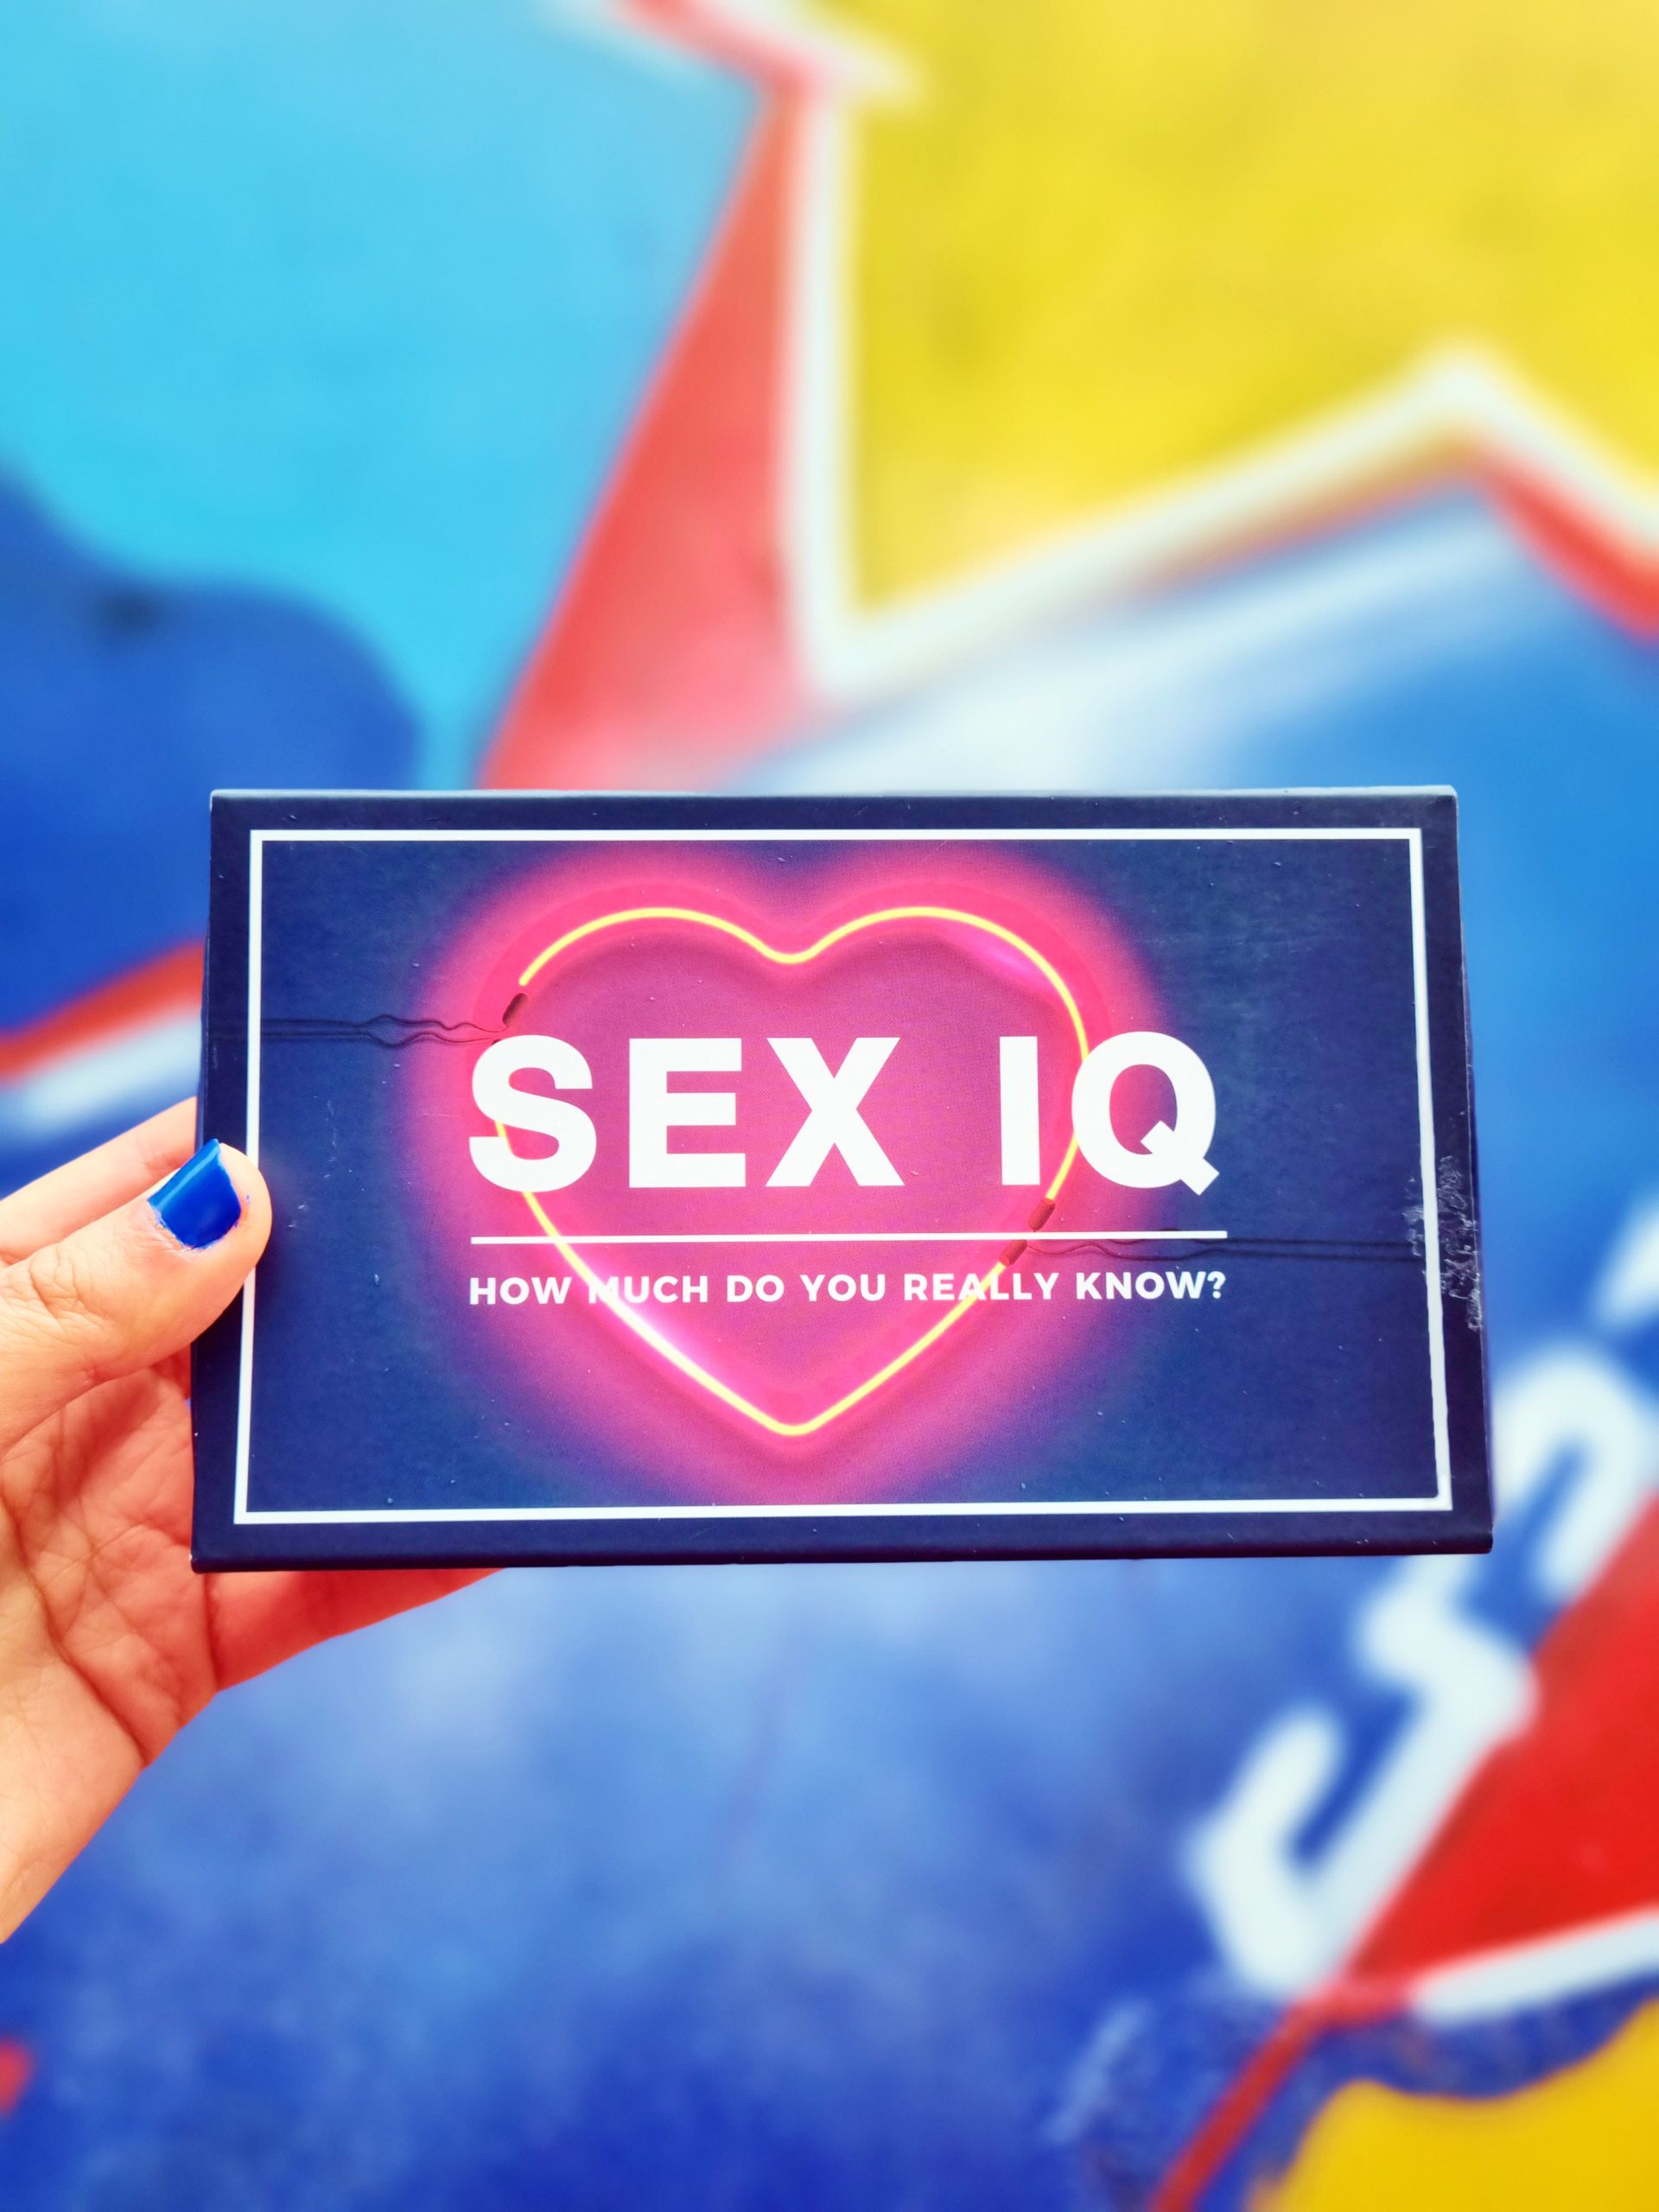 <img src="sex.jpg" alt="sex iq card game quirky valentine's day"/> 